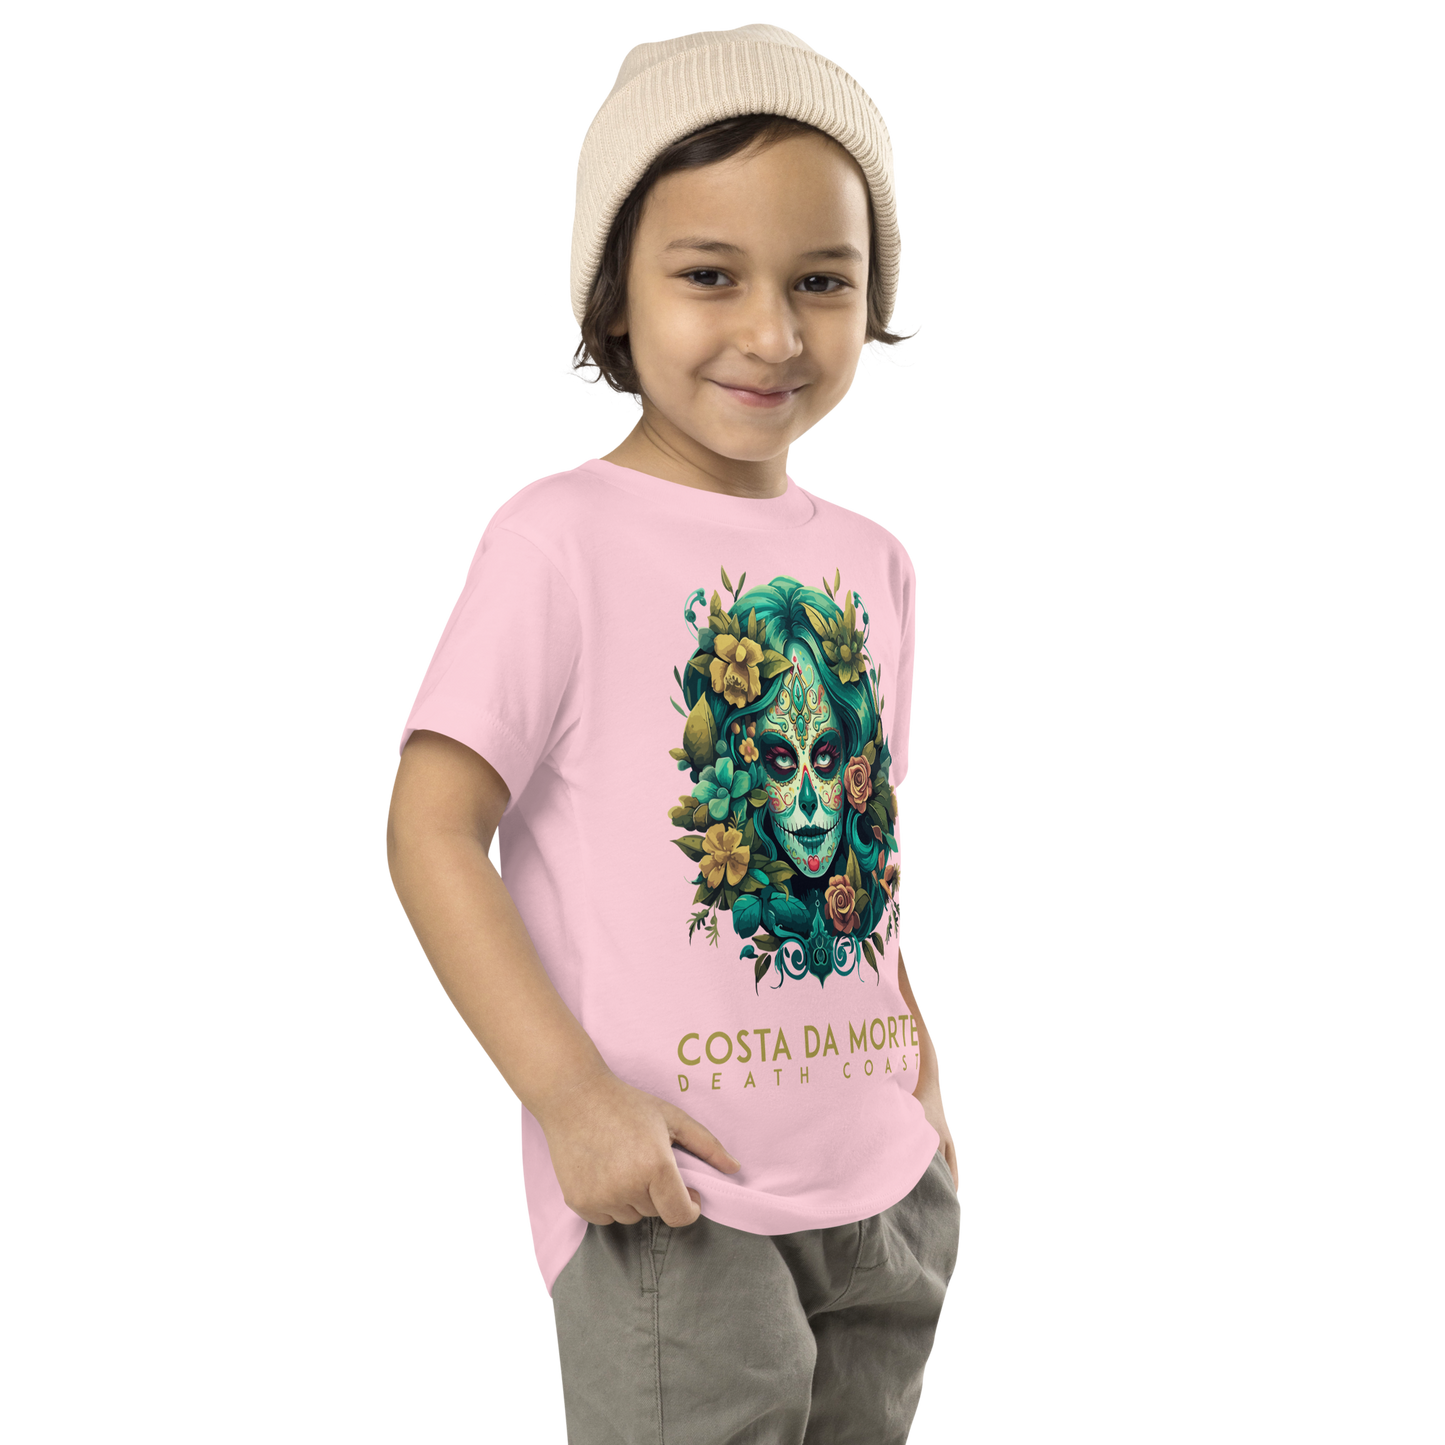 Infantil # ARCOS // Camiseta Esencial // Unisex